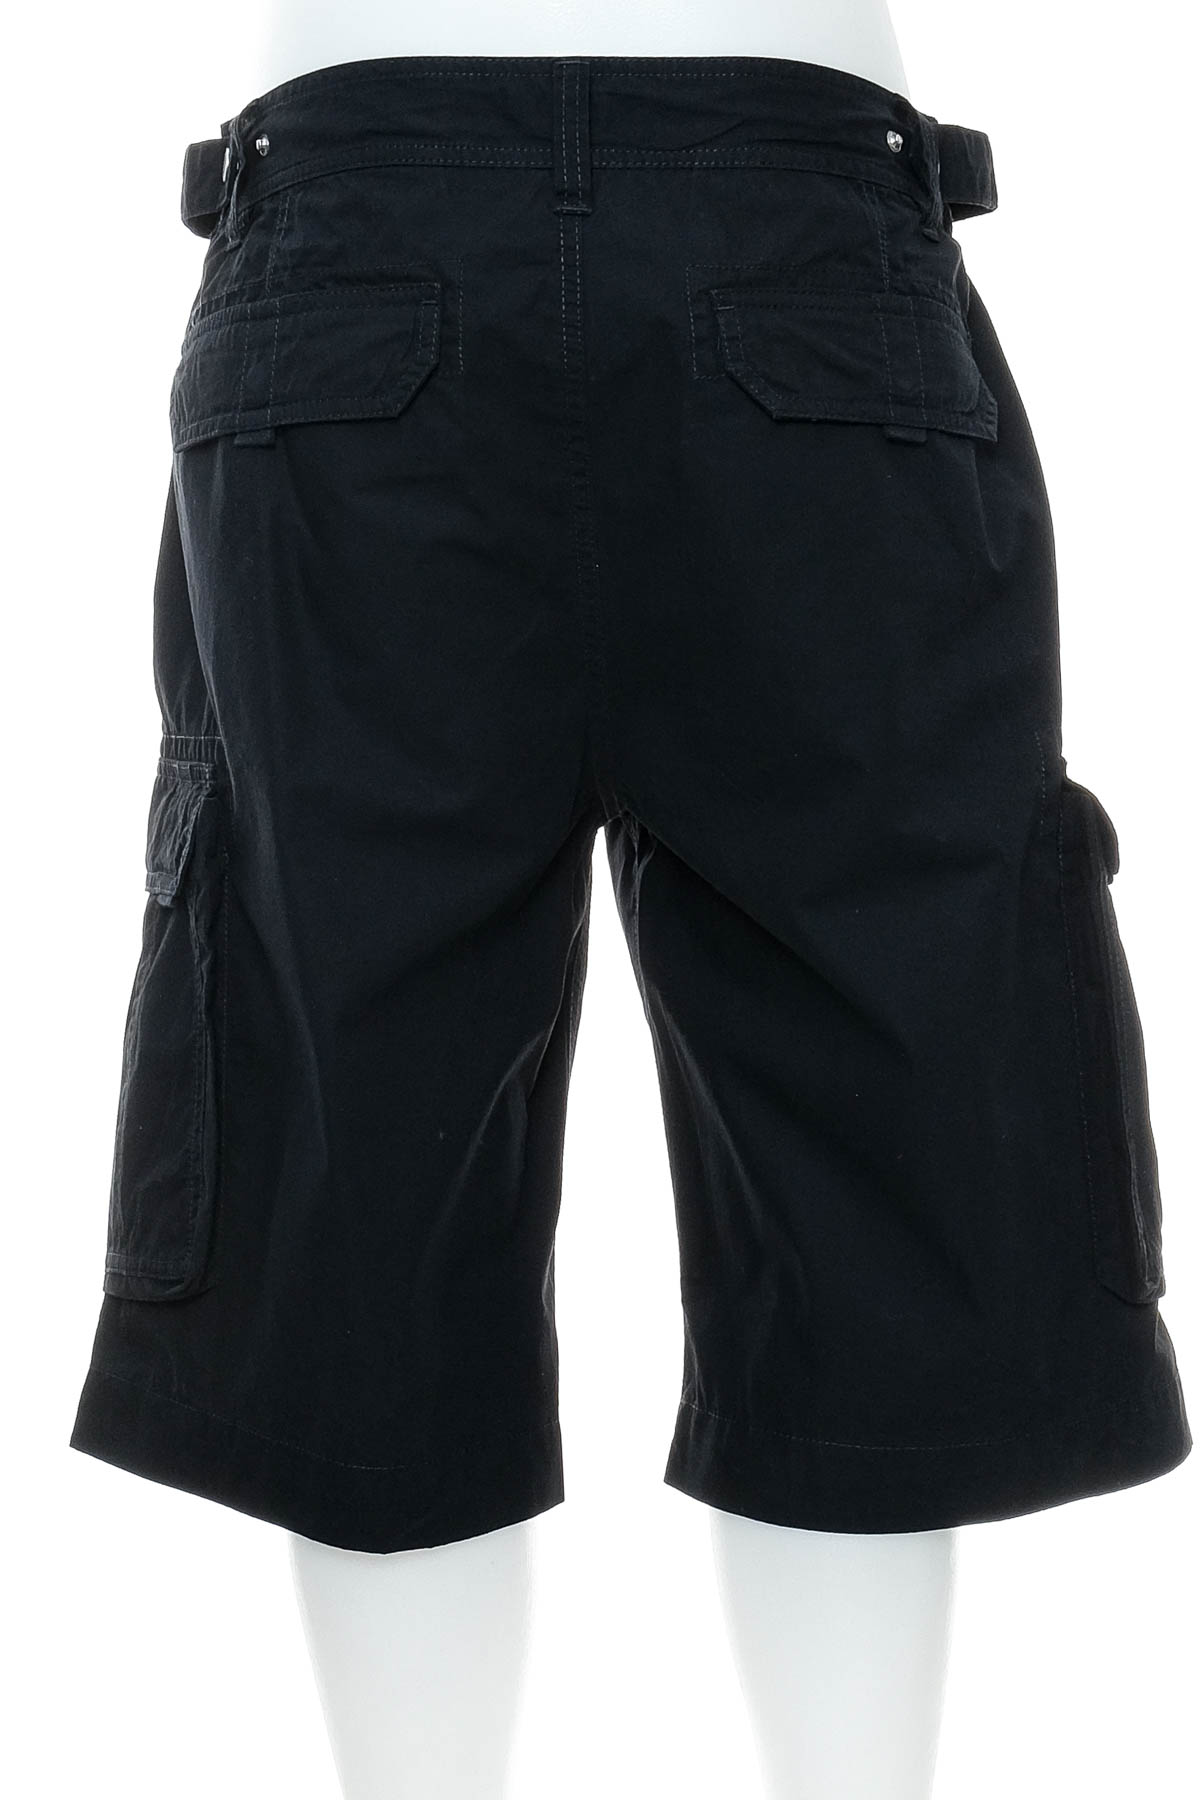 Men's shorts - Aigle - 1